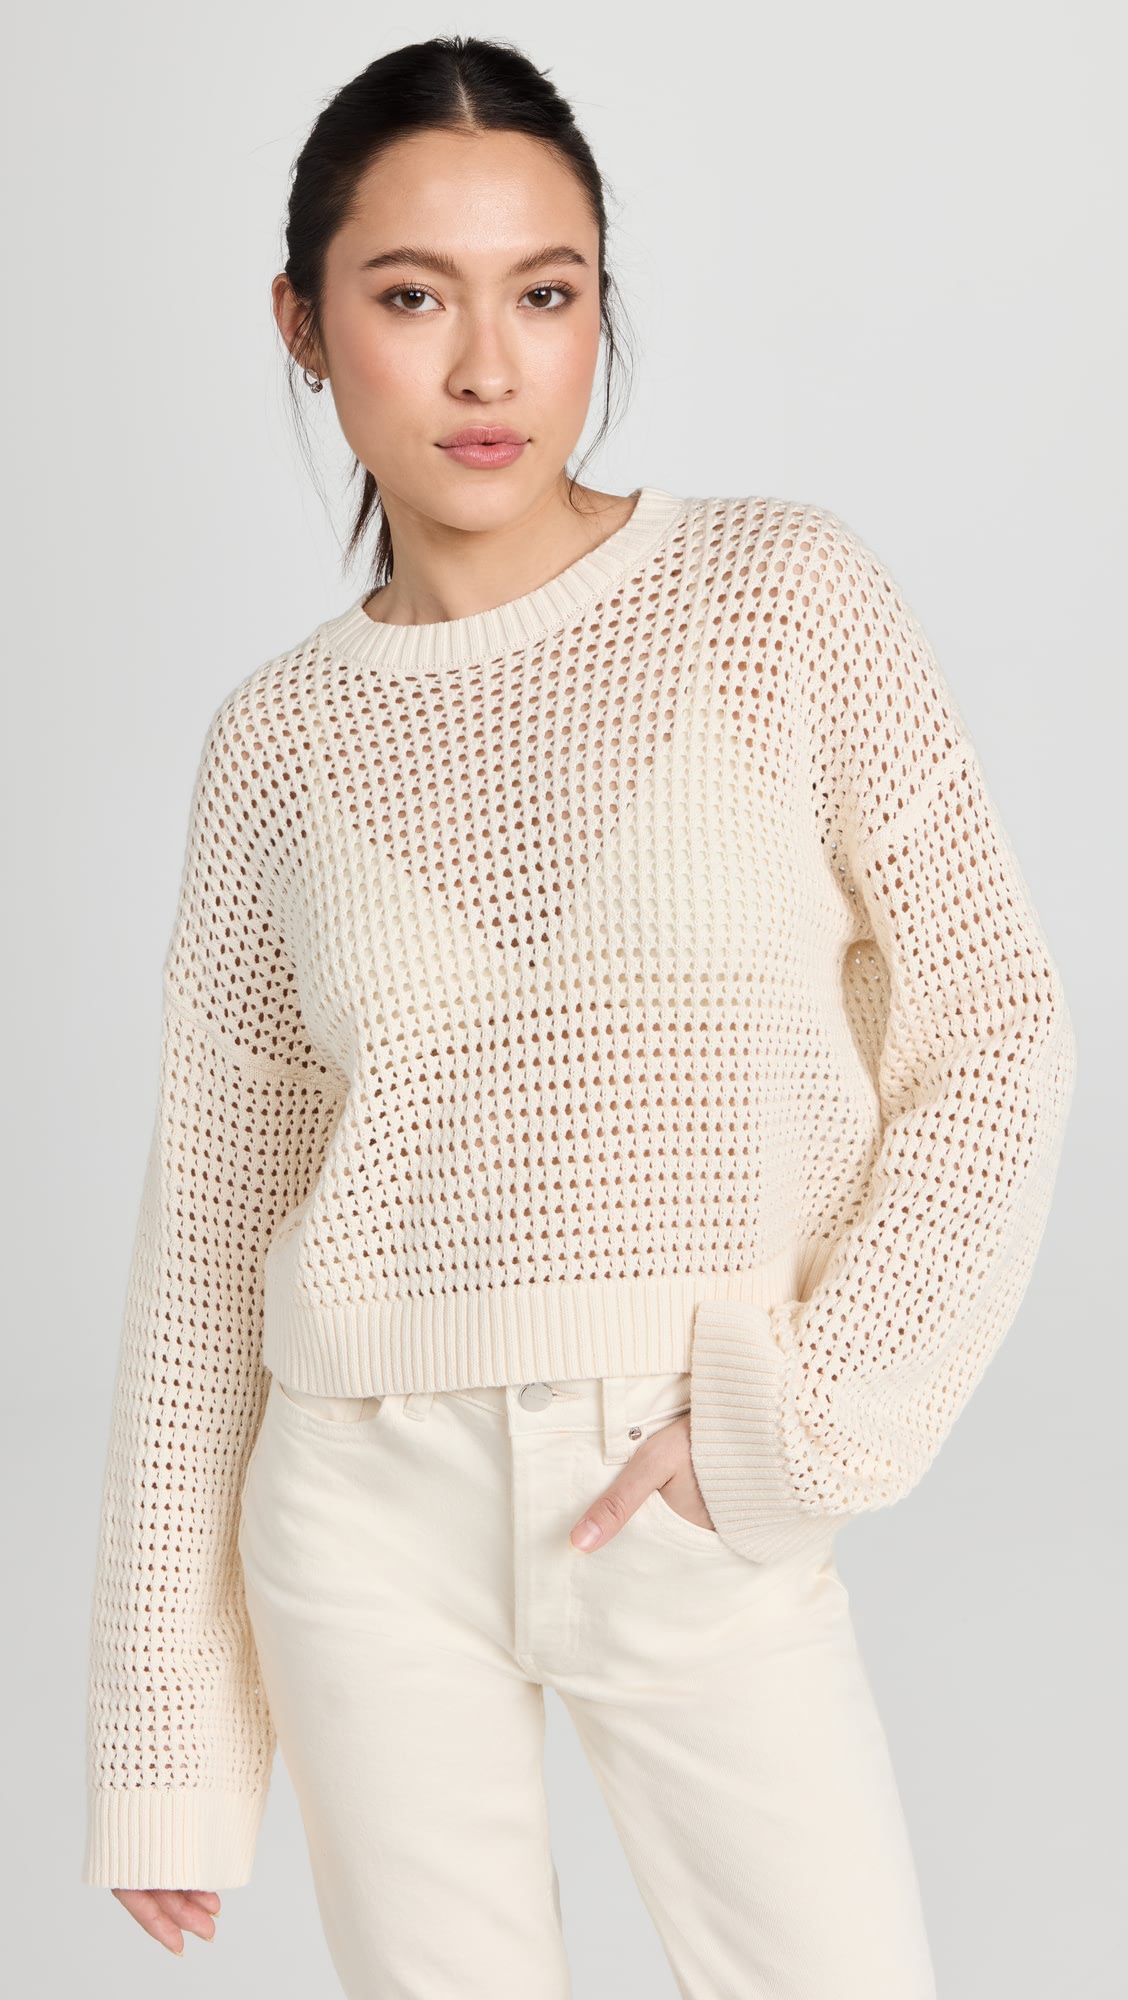 NSF – Blayne Crochet Crop Crew Sweater